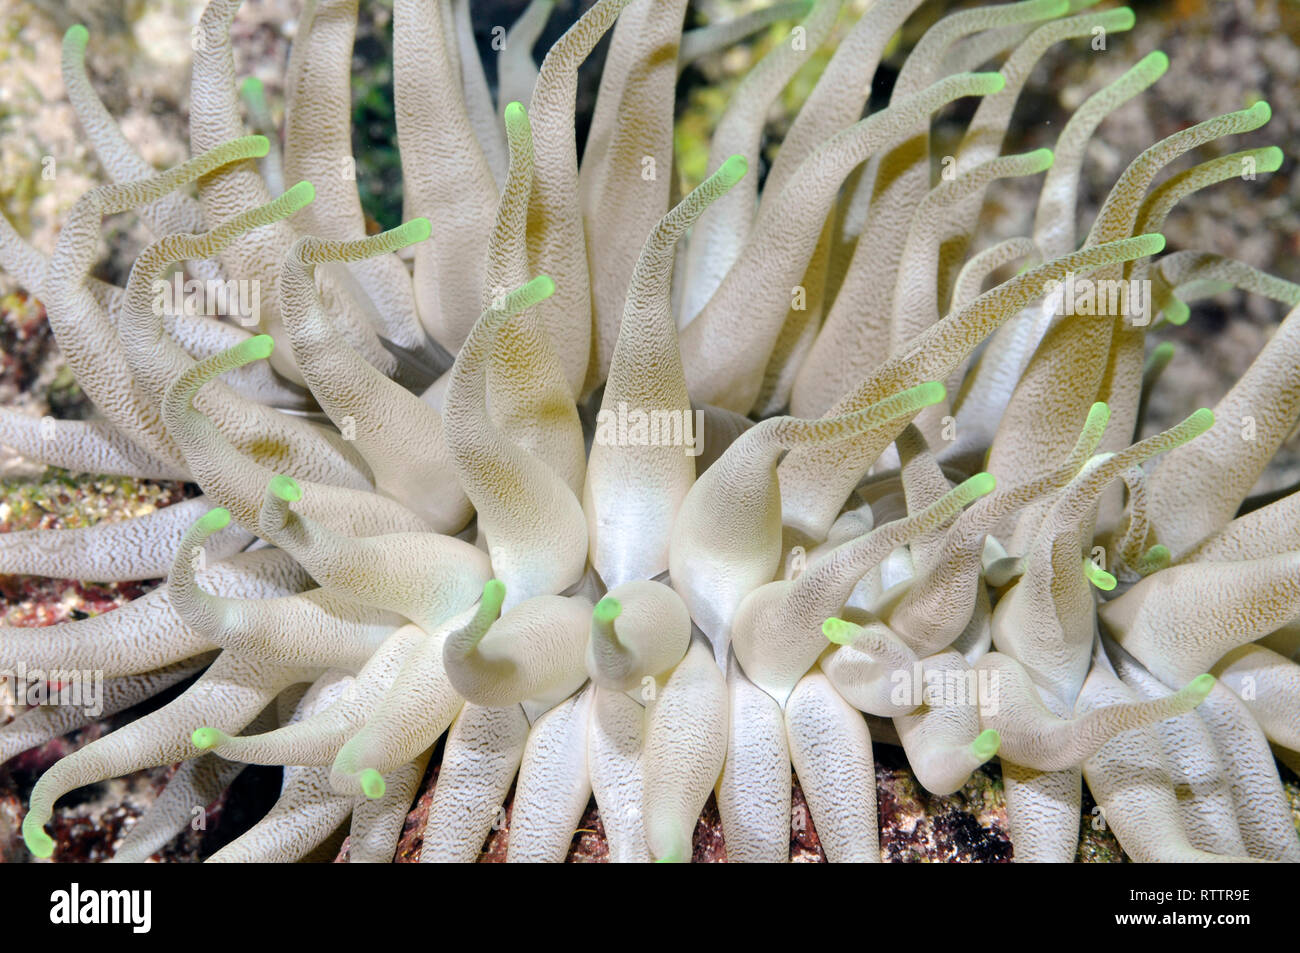 Giant anemone, Condylactis gigantea, Cozumel, Mexico, Caribbean Stock Photo